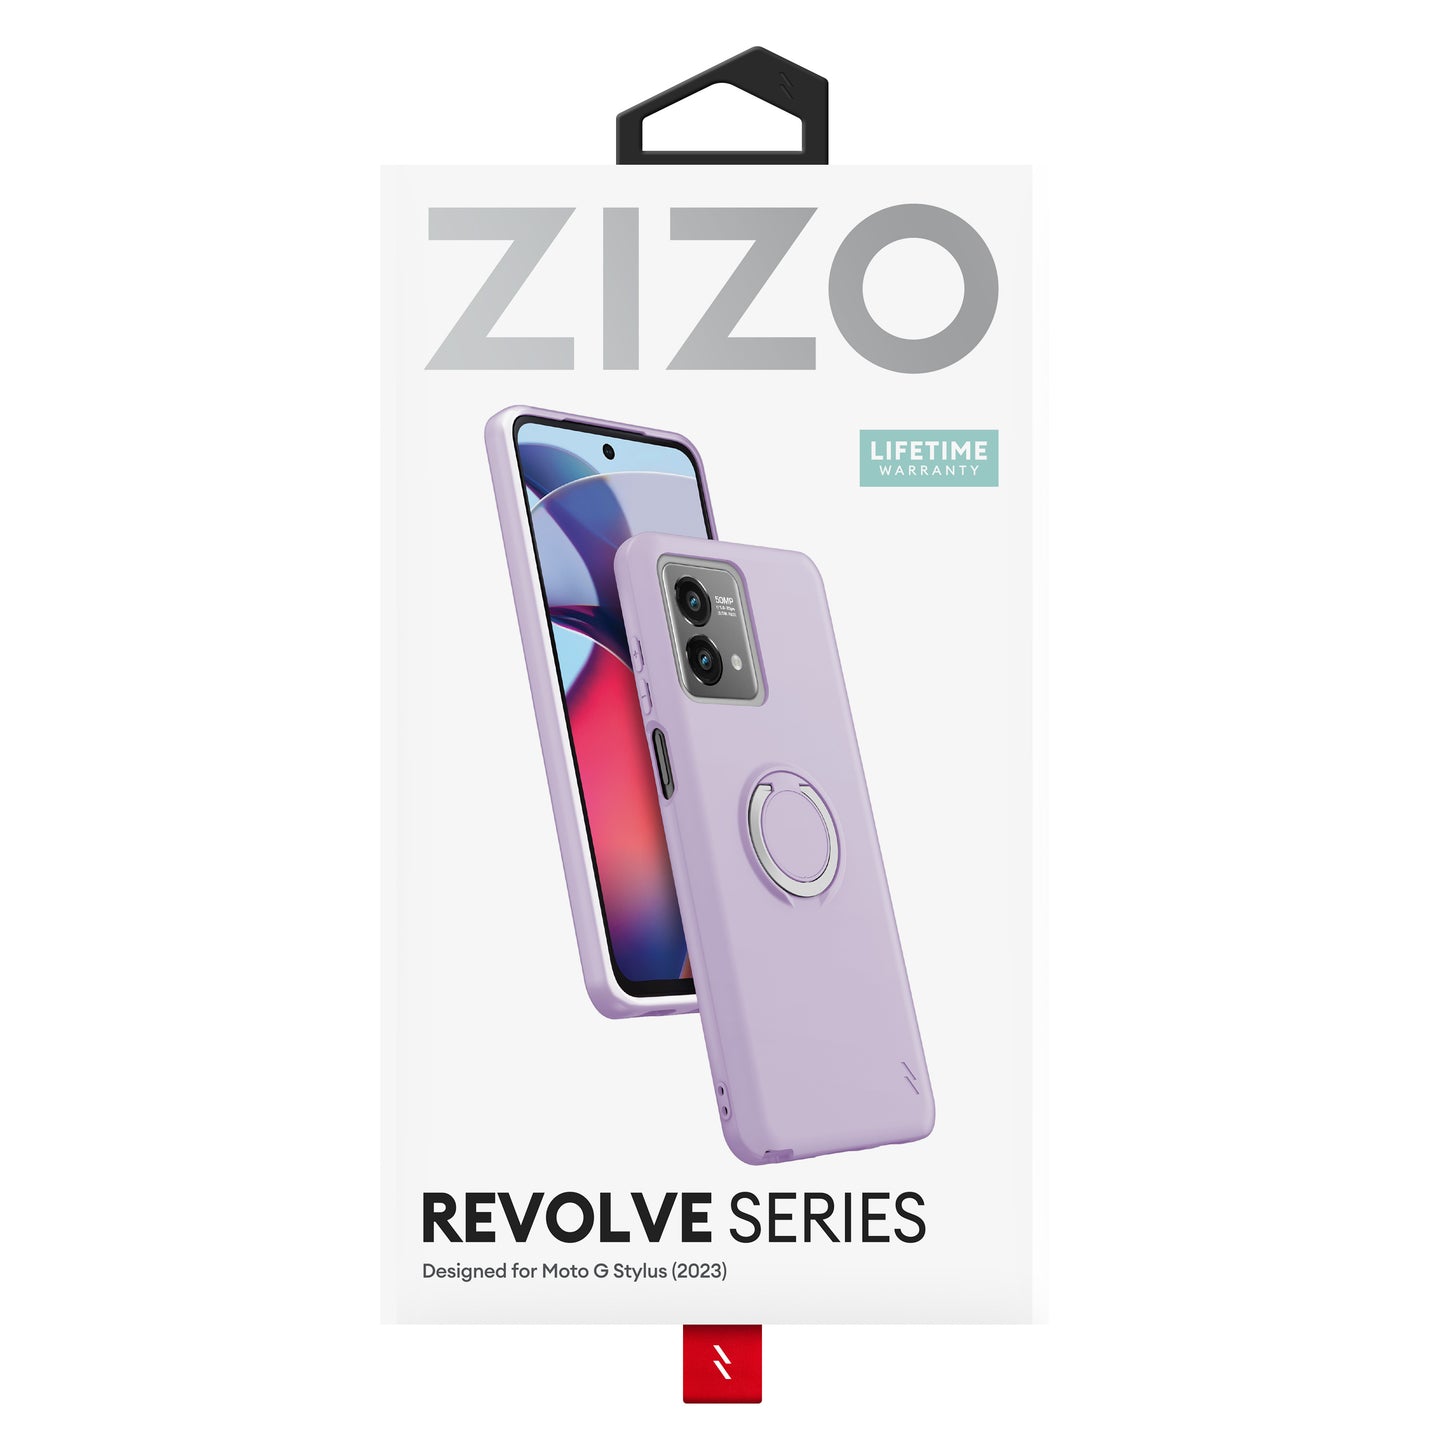 ZIZO REVOLVE Series moto g stylus (2023) Case - Ultra Violet